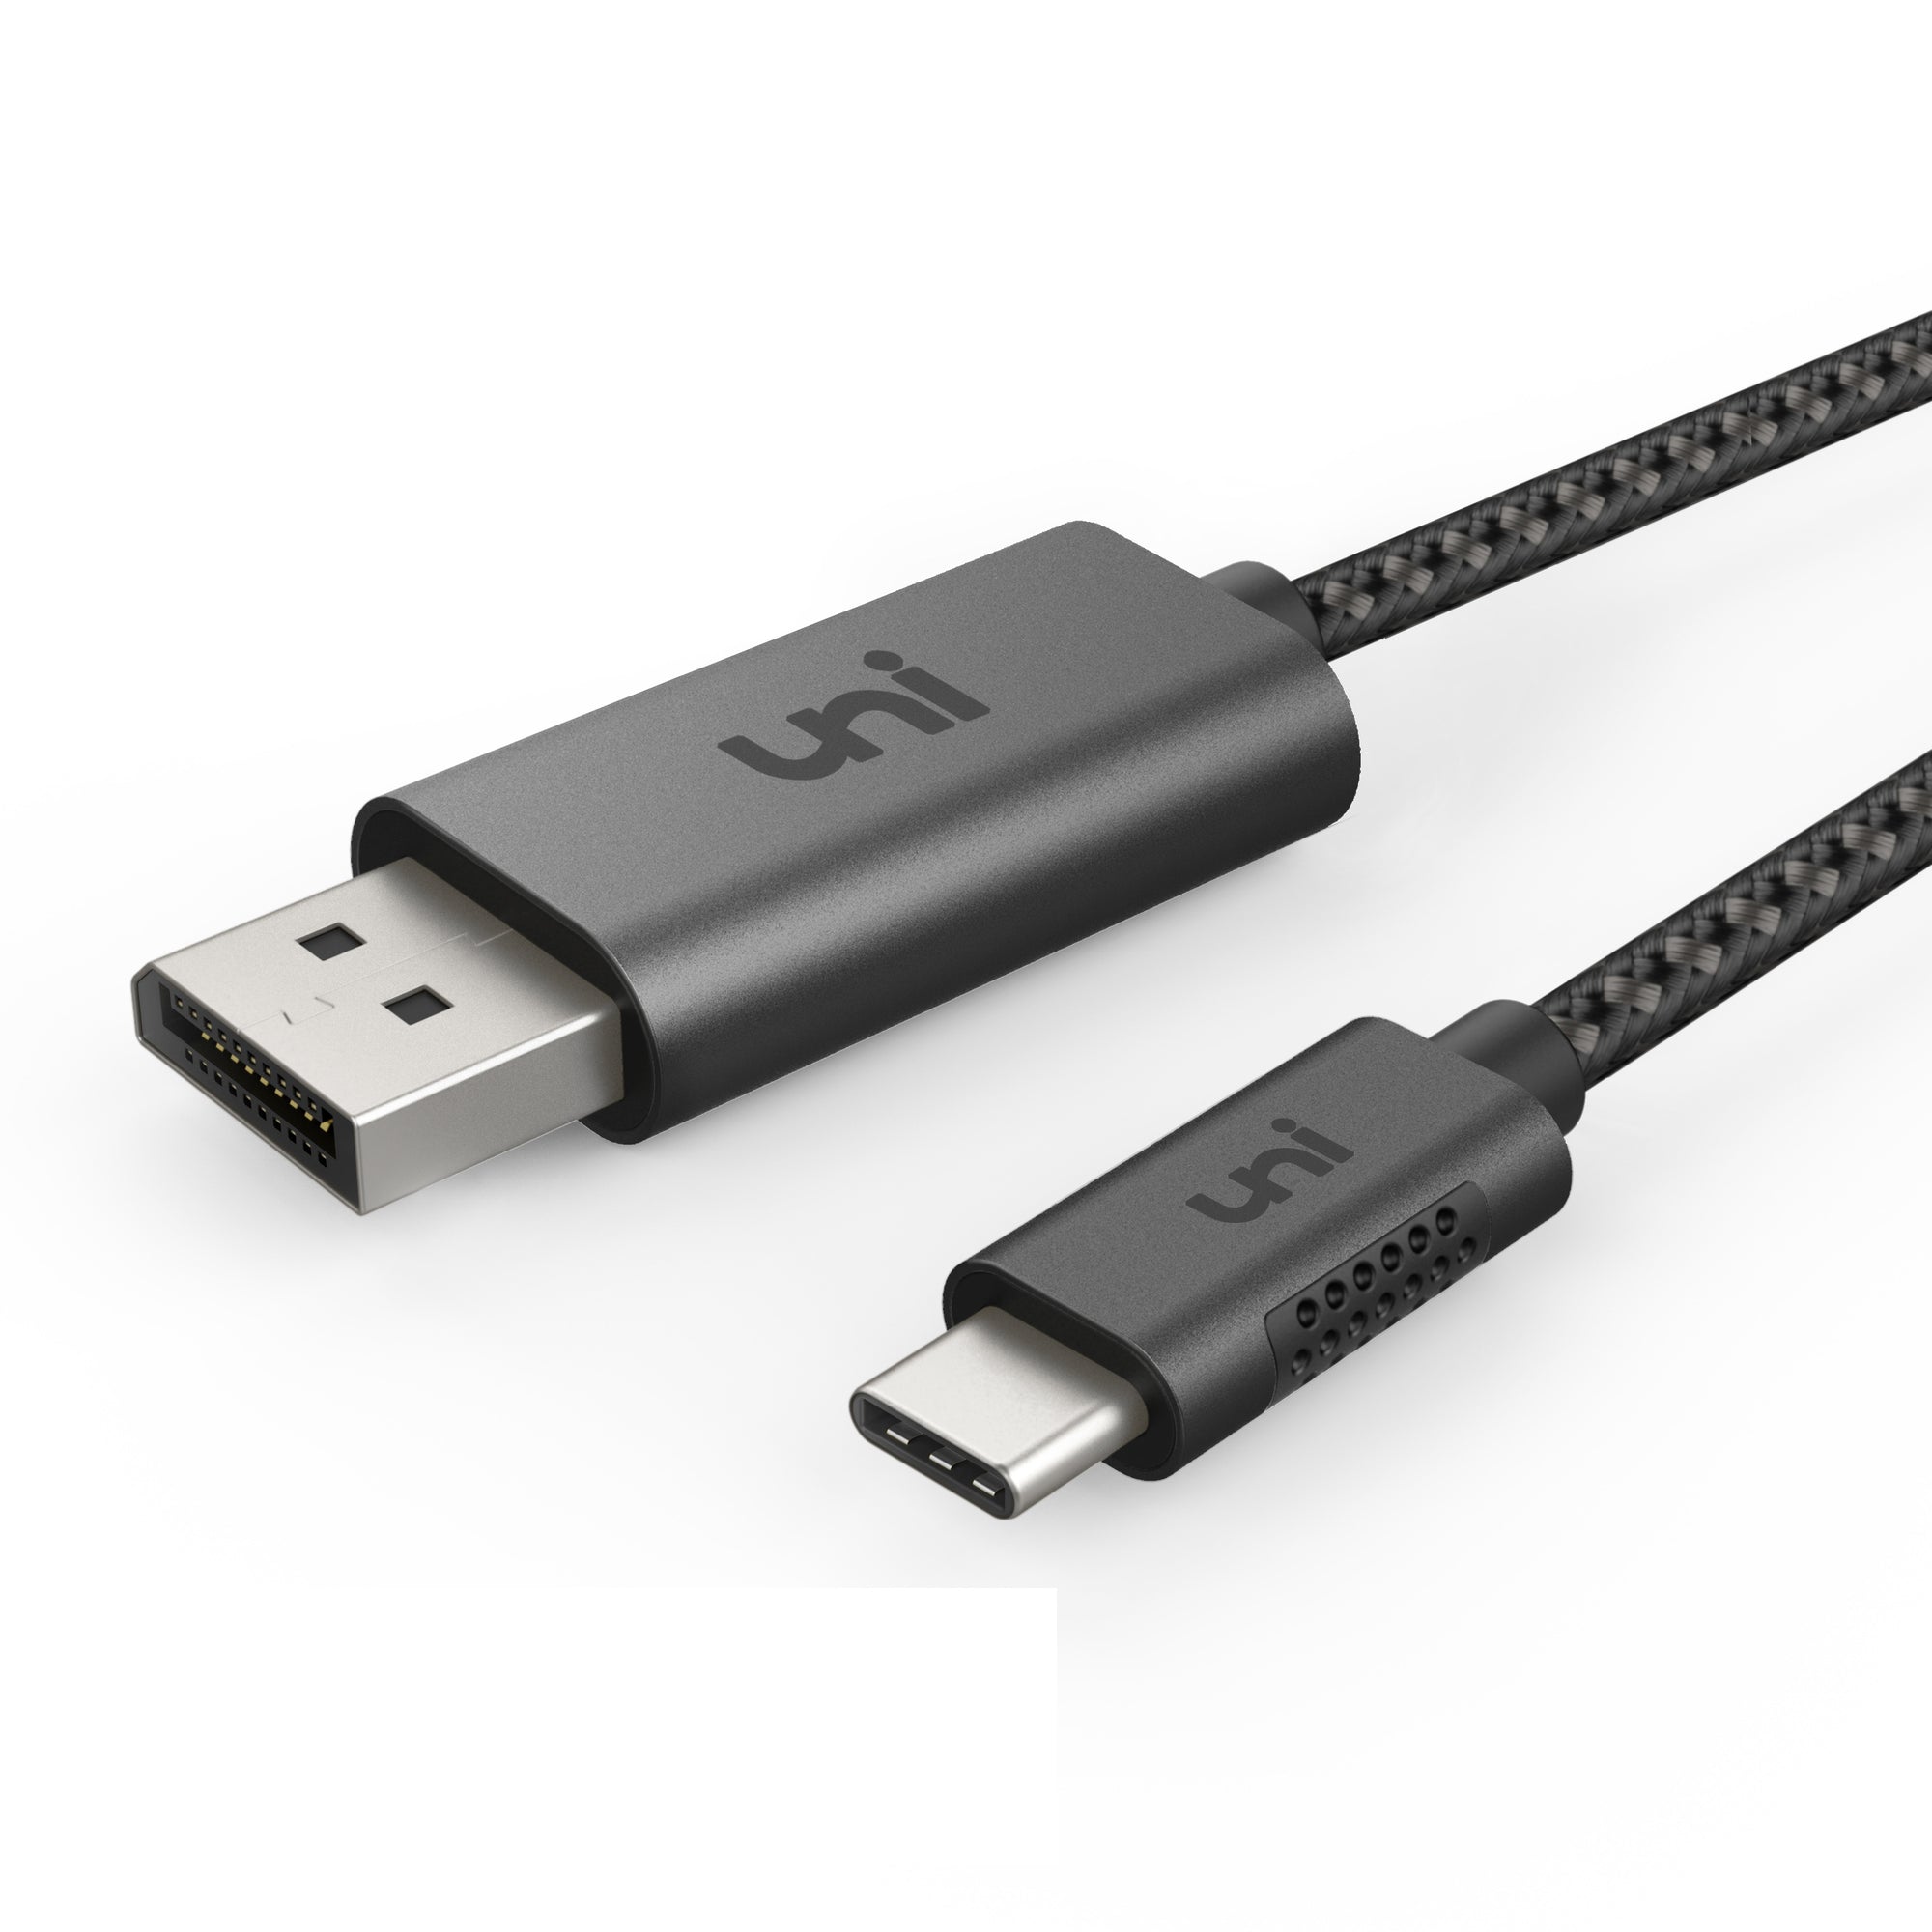 VALUE 11995788: DisplayPort 1.2 cable, DP-HDMI, 4K 60 Hz, 5.0 m at